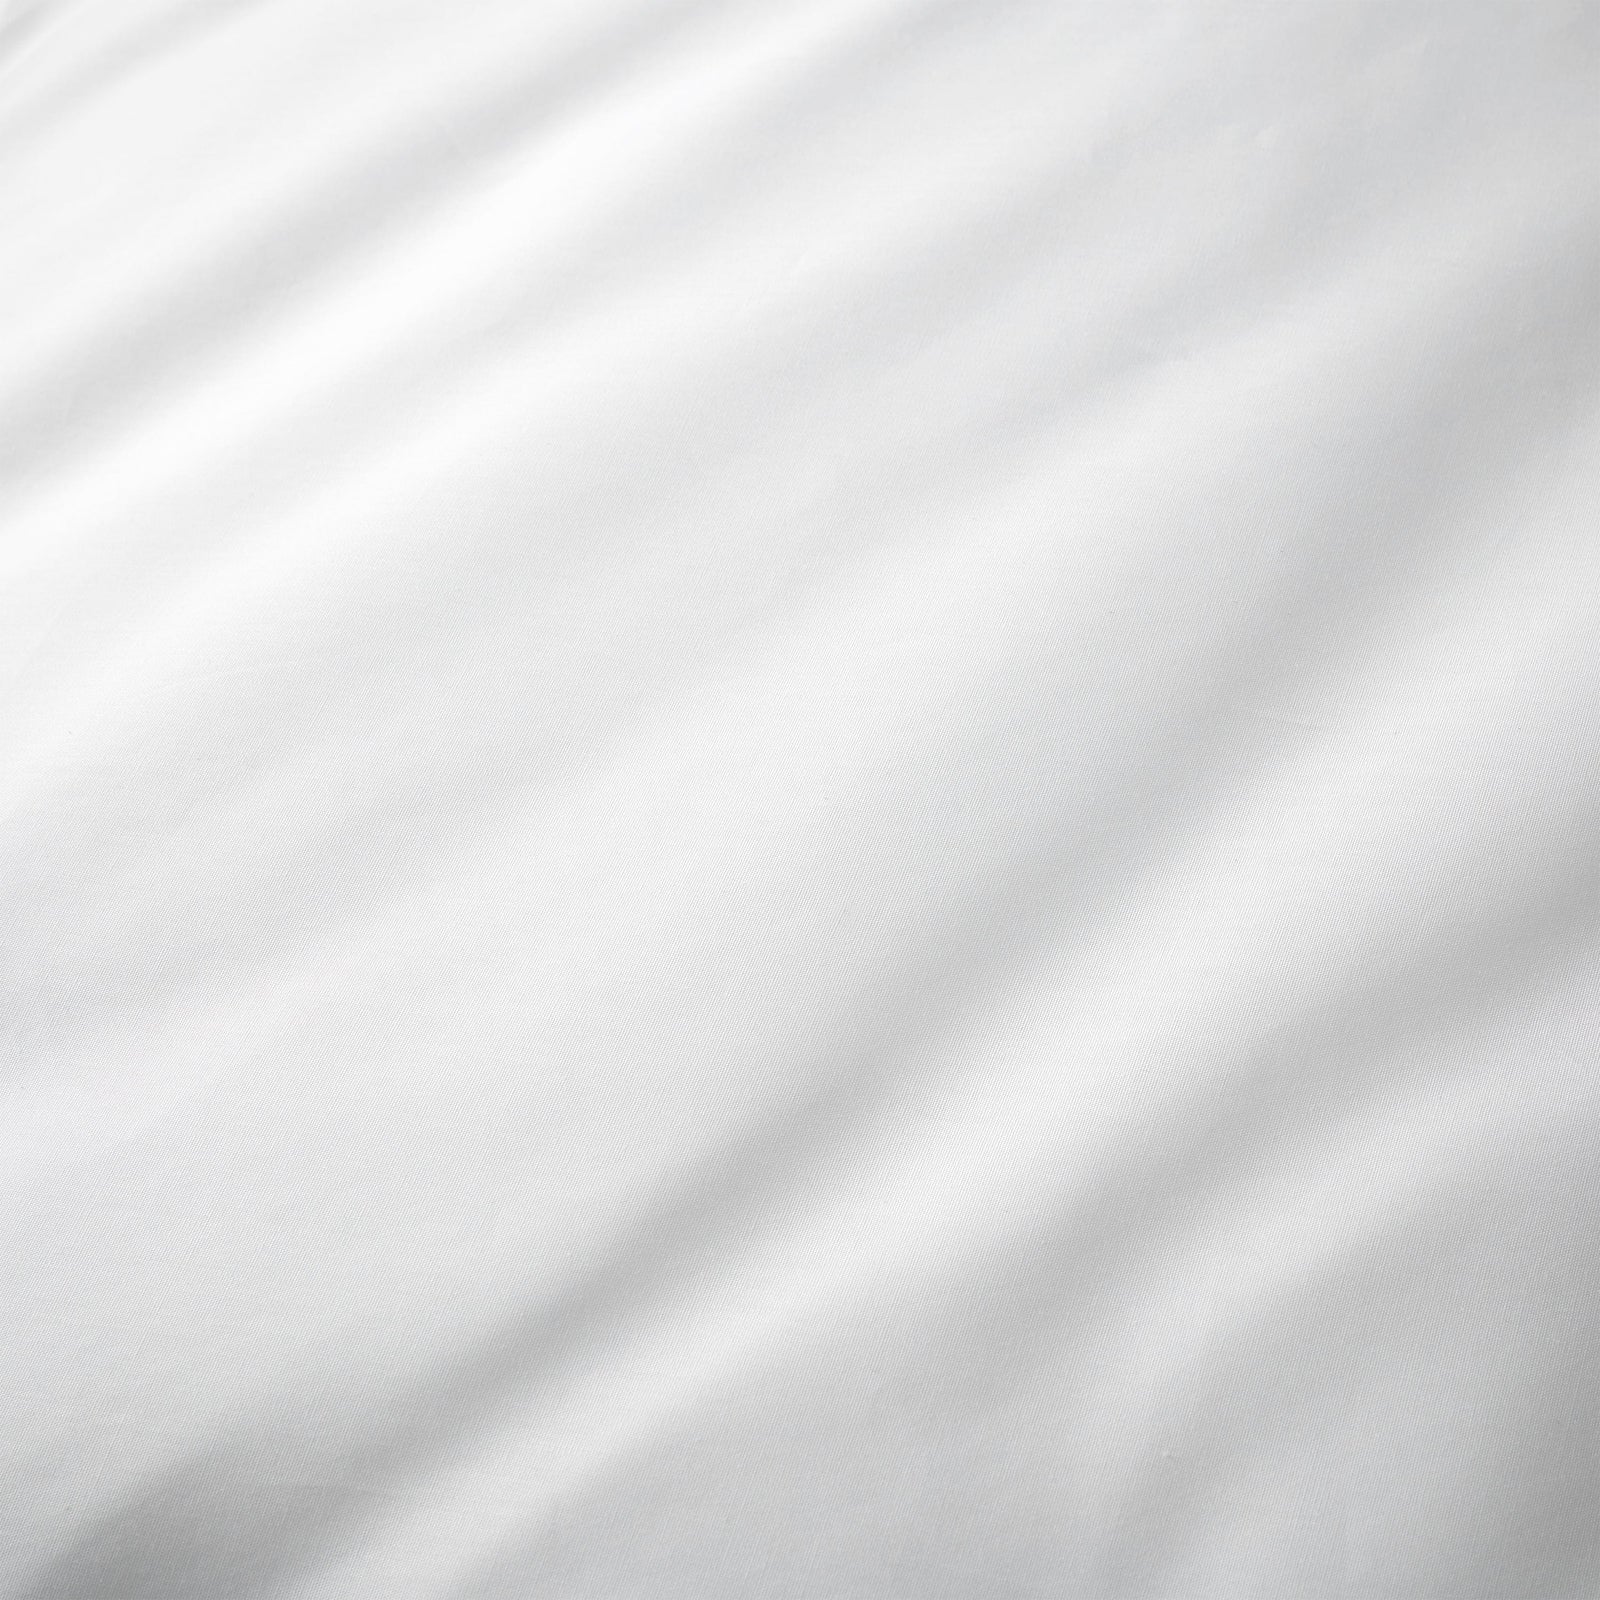 Bianca Fine Linens Bedding Duvet Cover Set with Pillowcase White